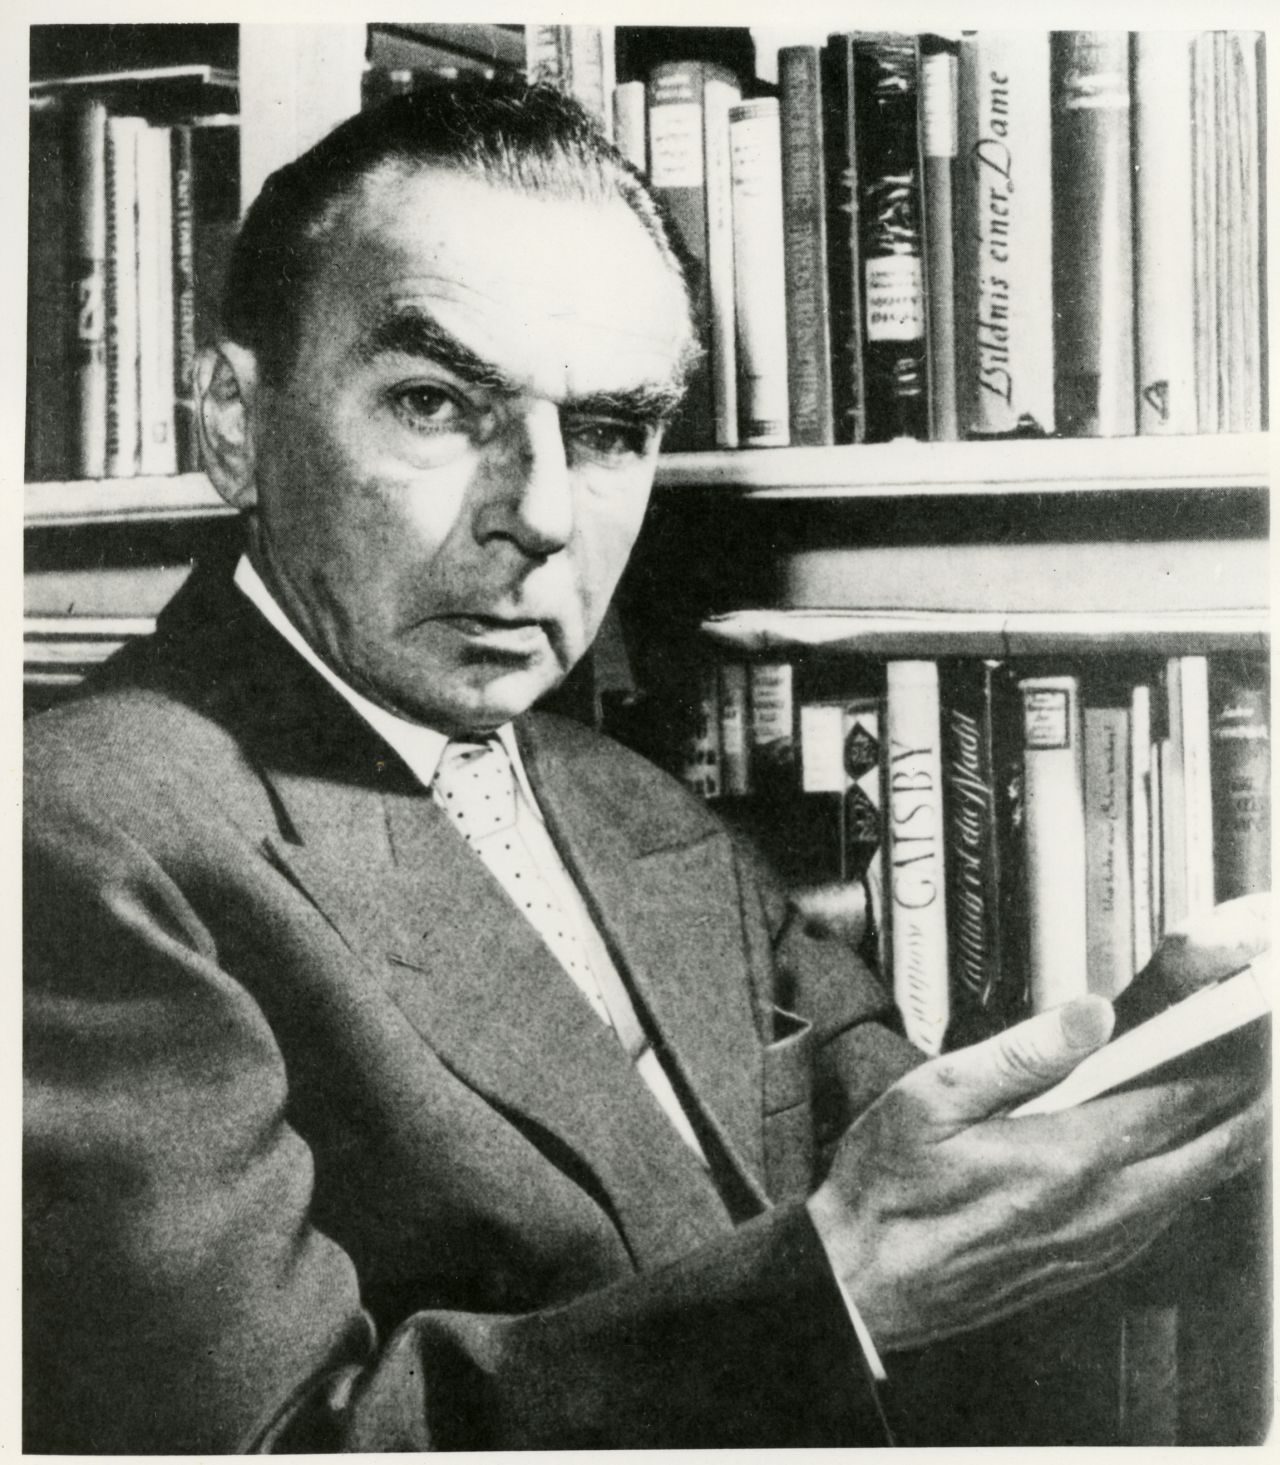 Porträtfotografie des bekannten Schriftstellers Erich Kästner, um 1964